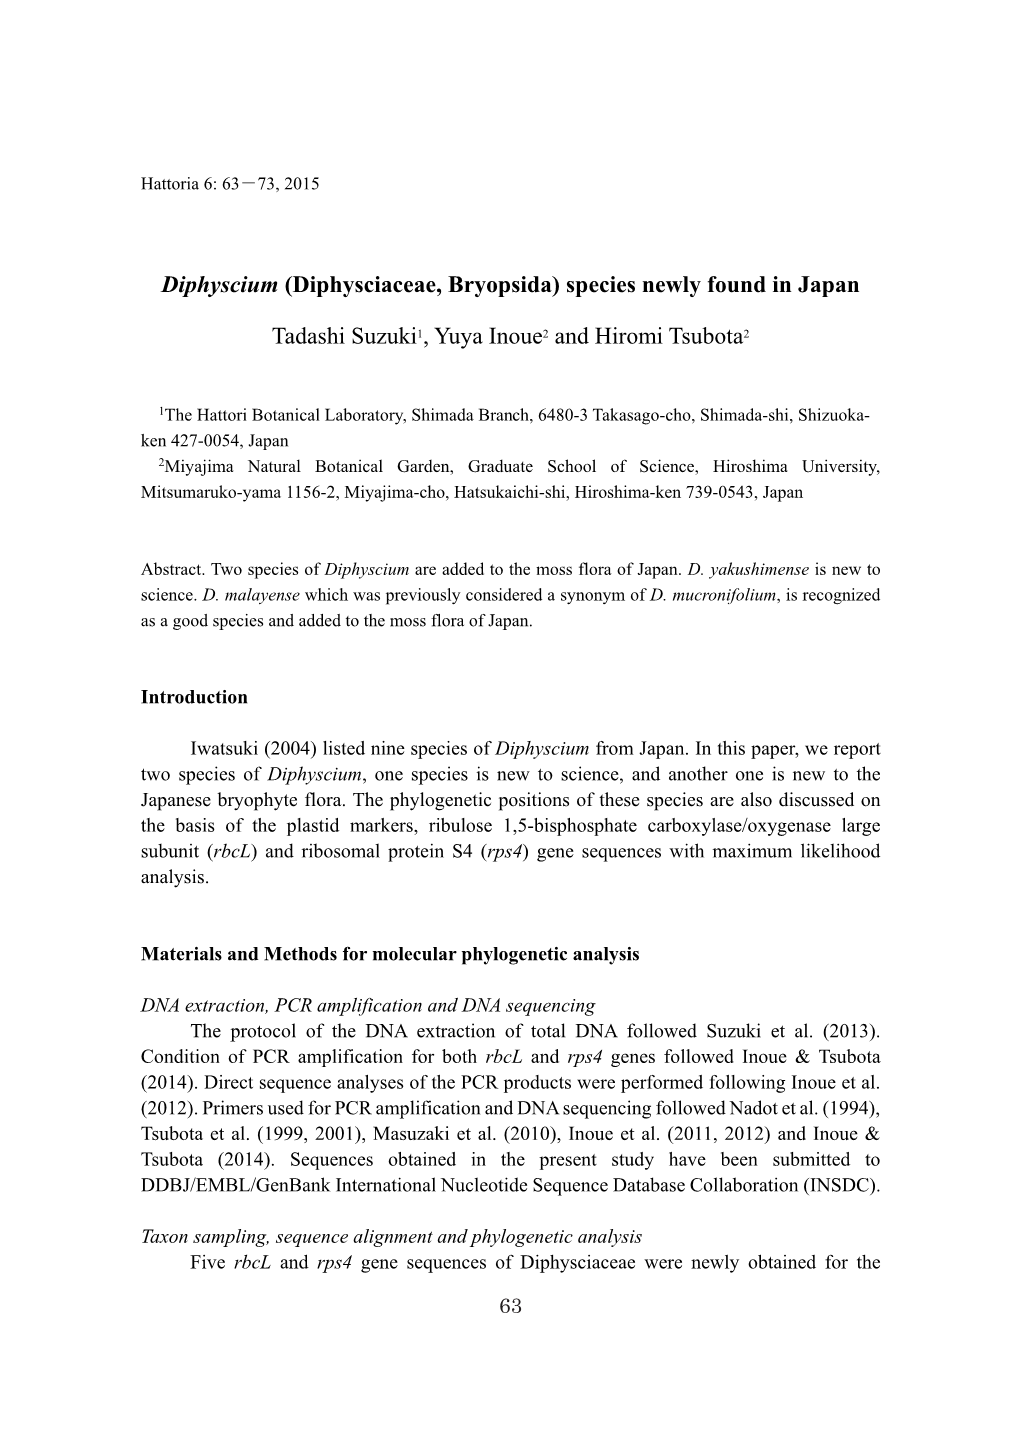 Diphyscium (Diphysciaceae, Bryopsida) Species Newly Found in Japan